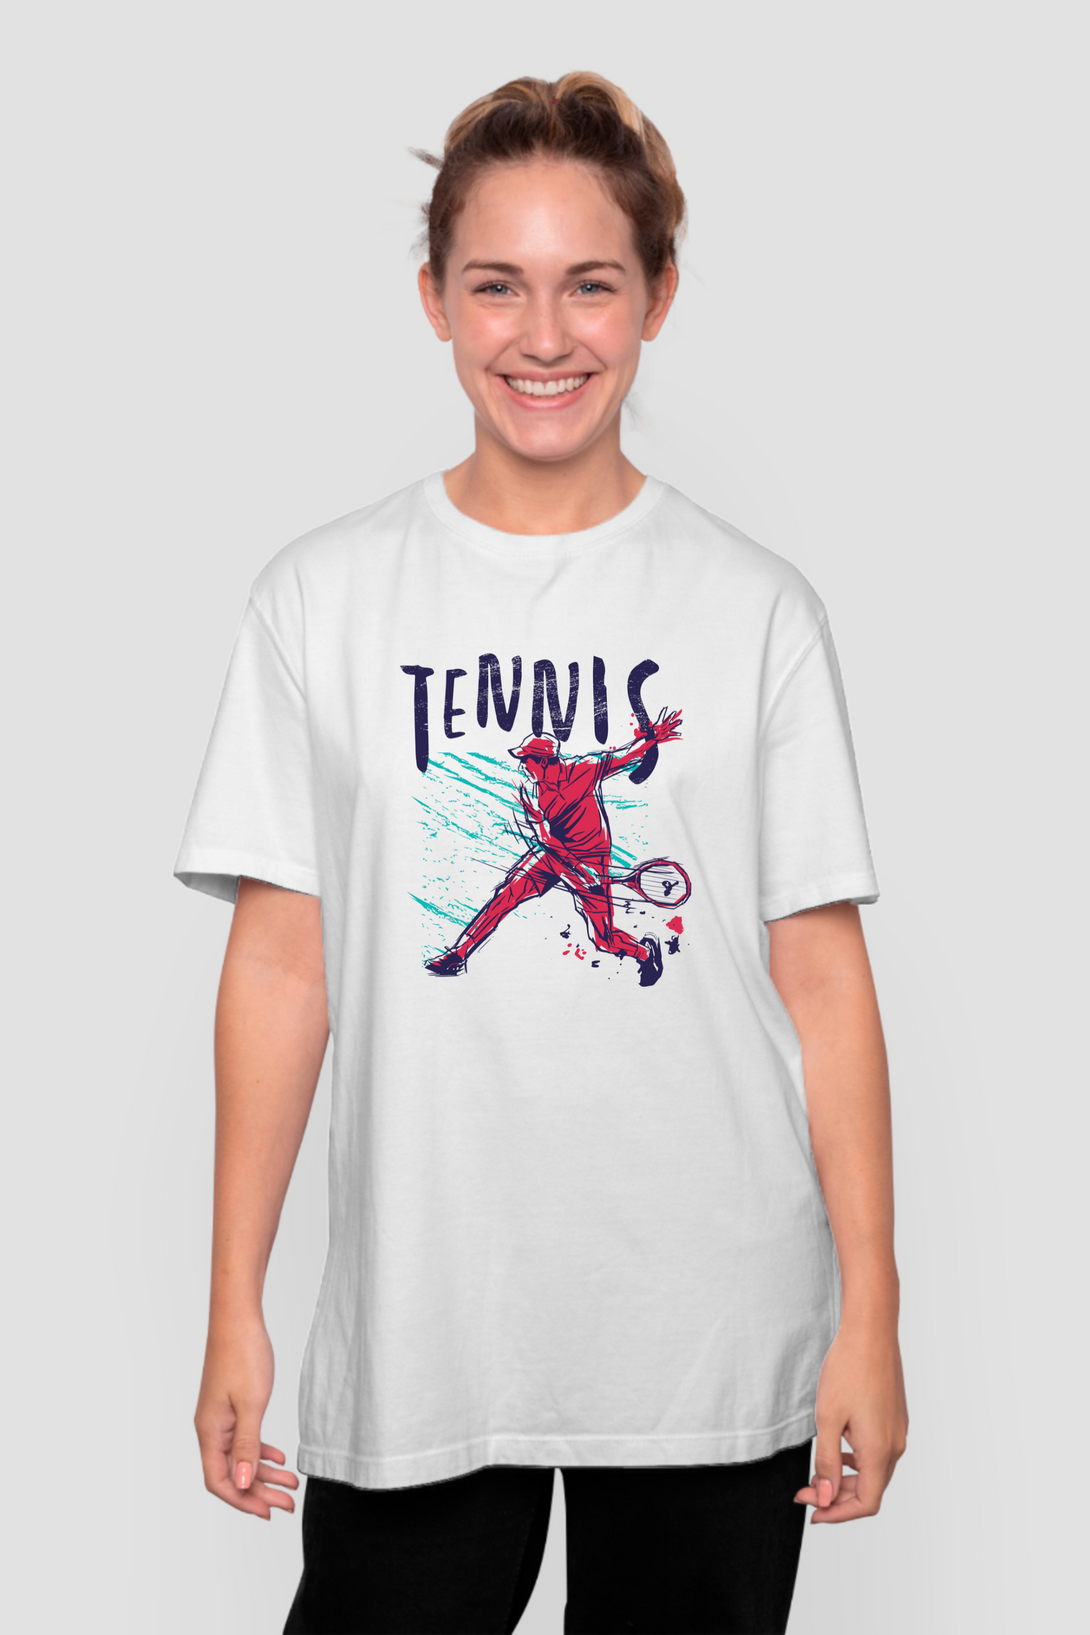 Tennis Printed Oversized T-Shirt For Women - WowWaves - 7